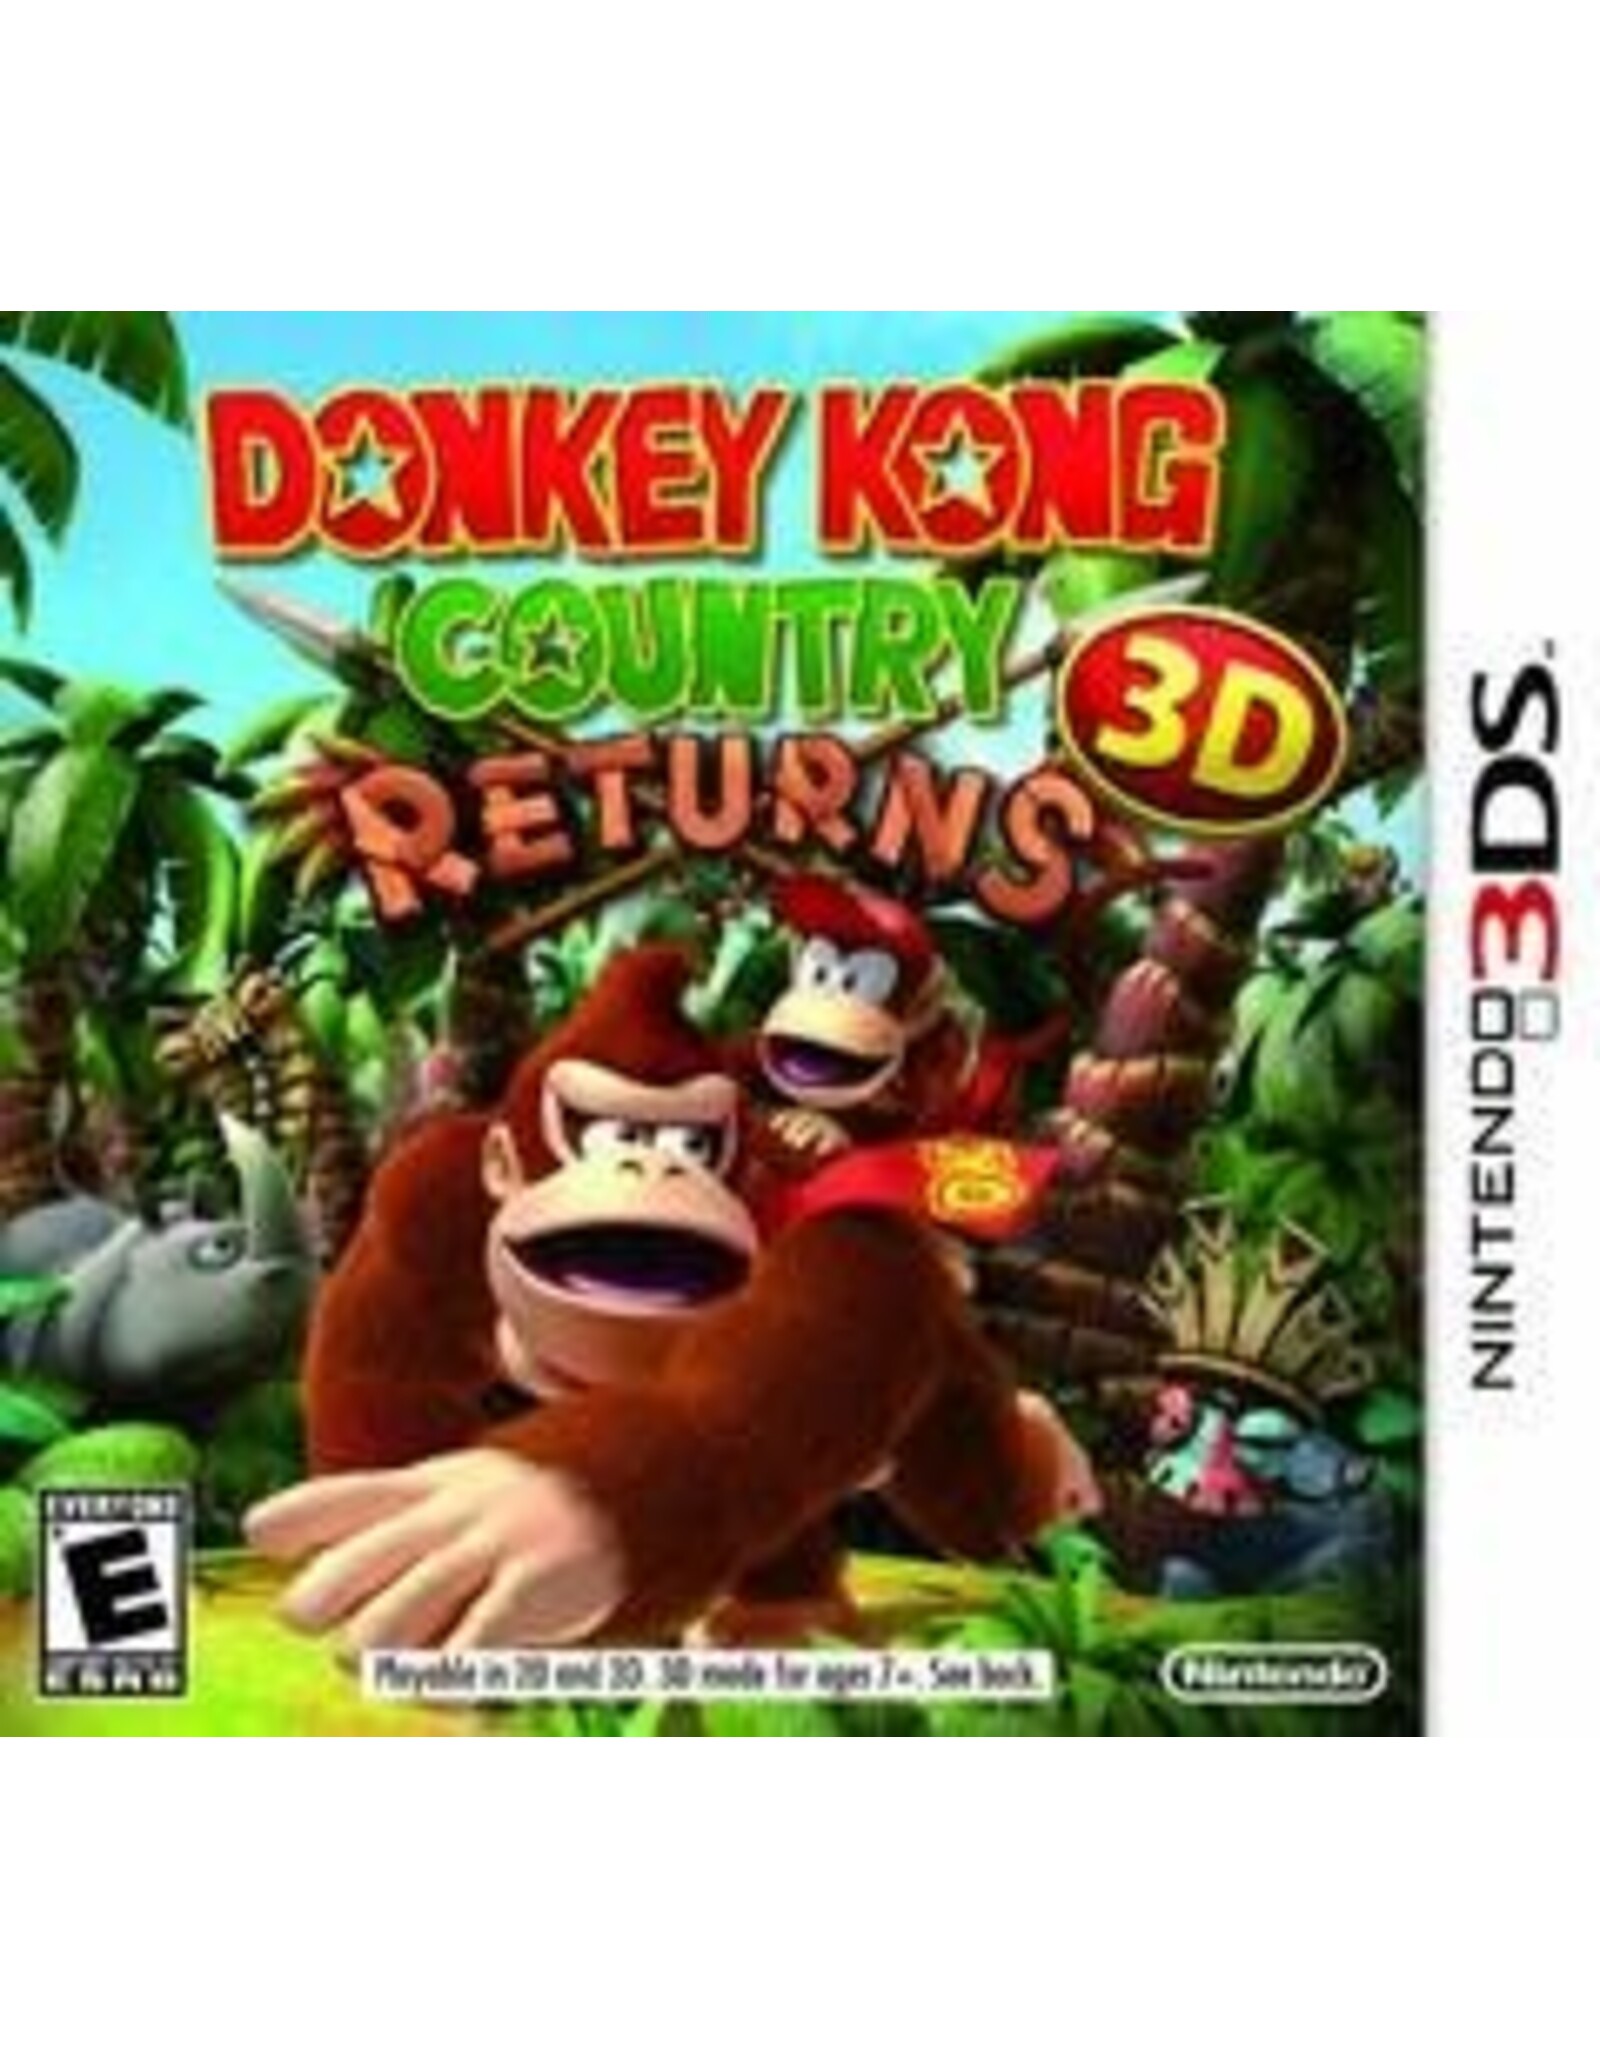 Nintendo 3DS Donkey Kong Country Returns 3D (No Manual)